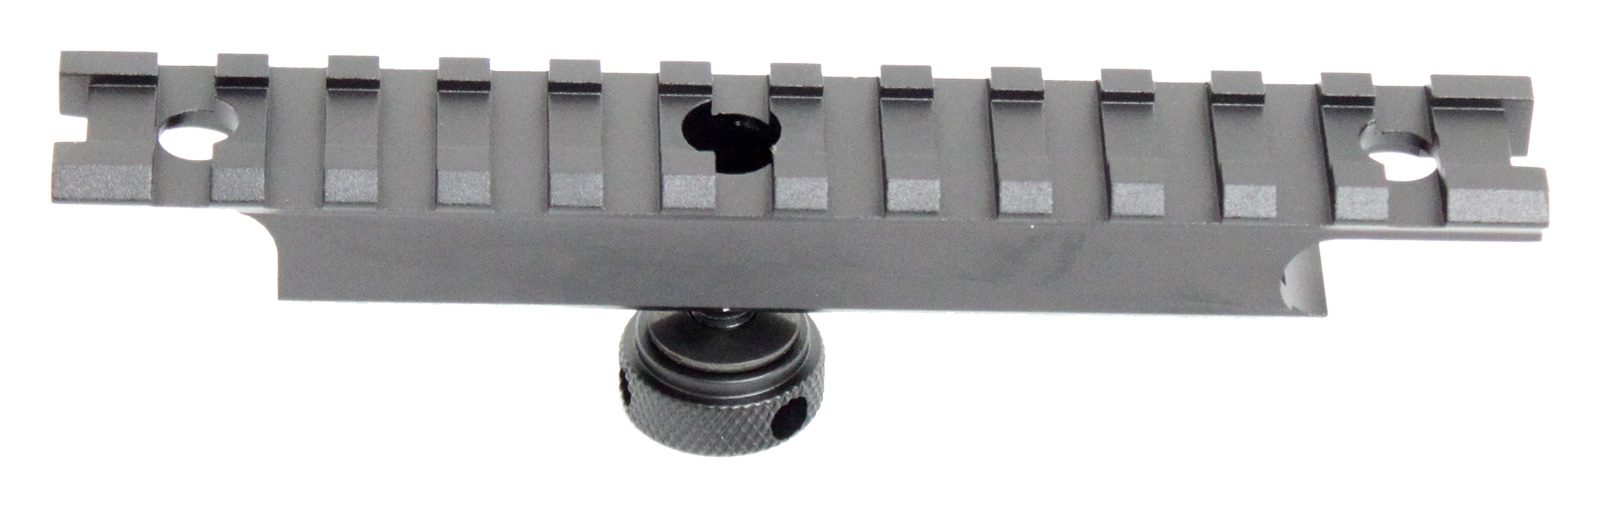 ar15-carry-handle-rail-mount-12-slots-120536